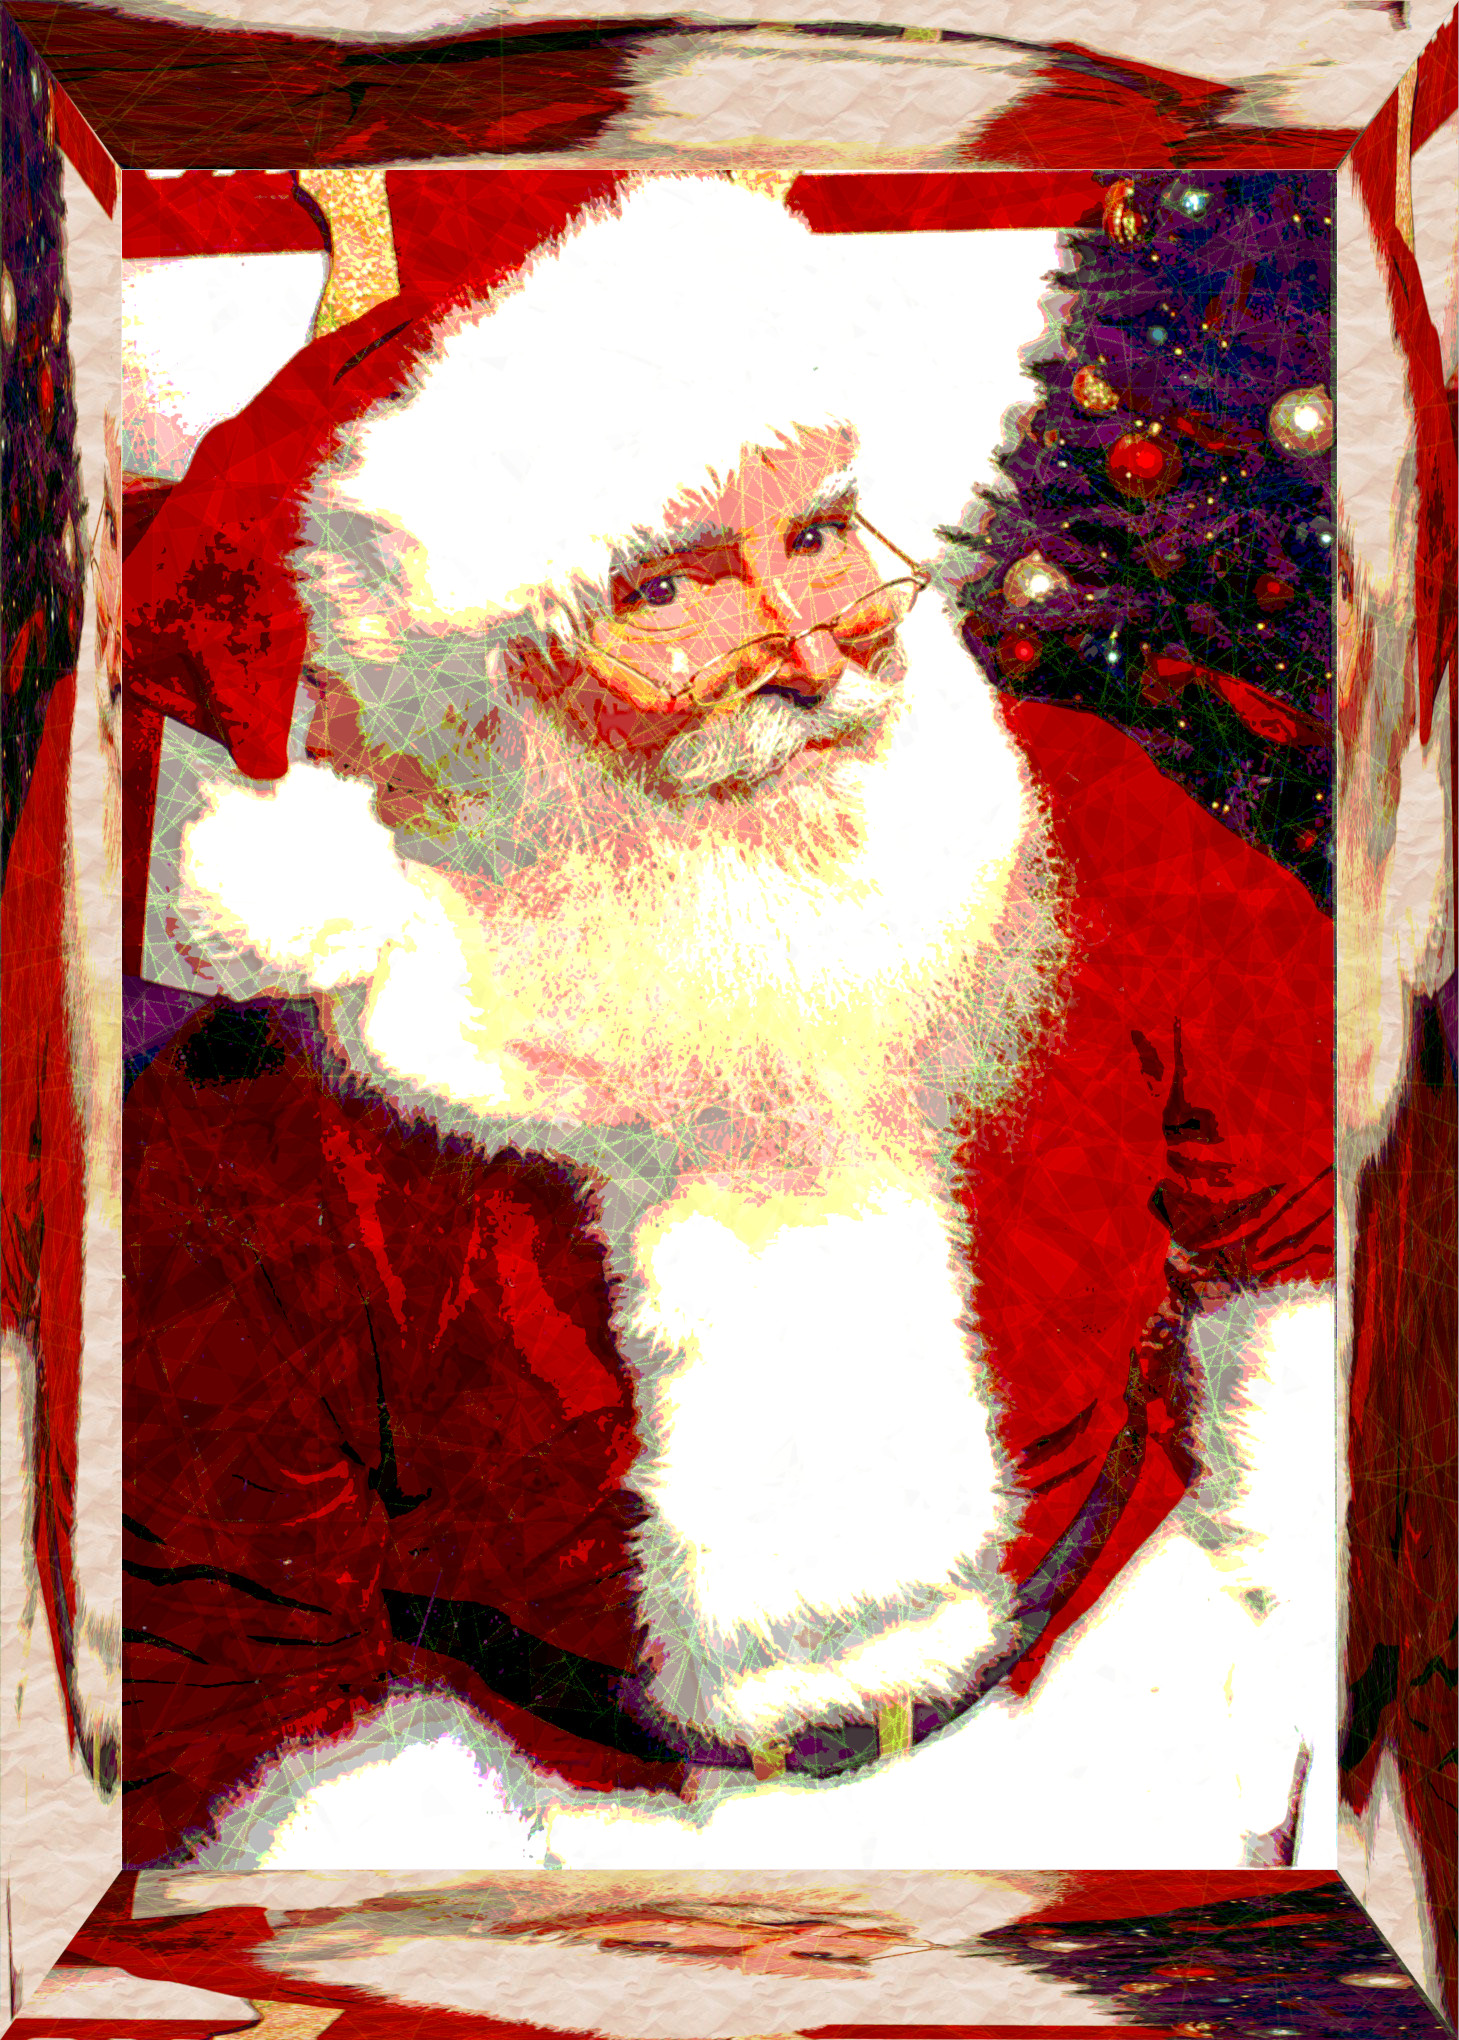 Jonathan_G_Meath_portrays_Santa_Claus_Lyle'image_DN_DrawEffect_I.jpg